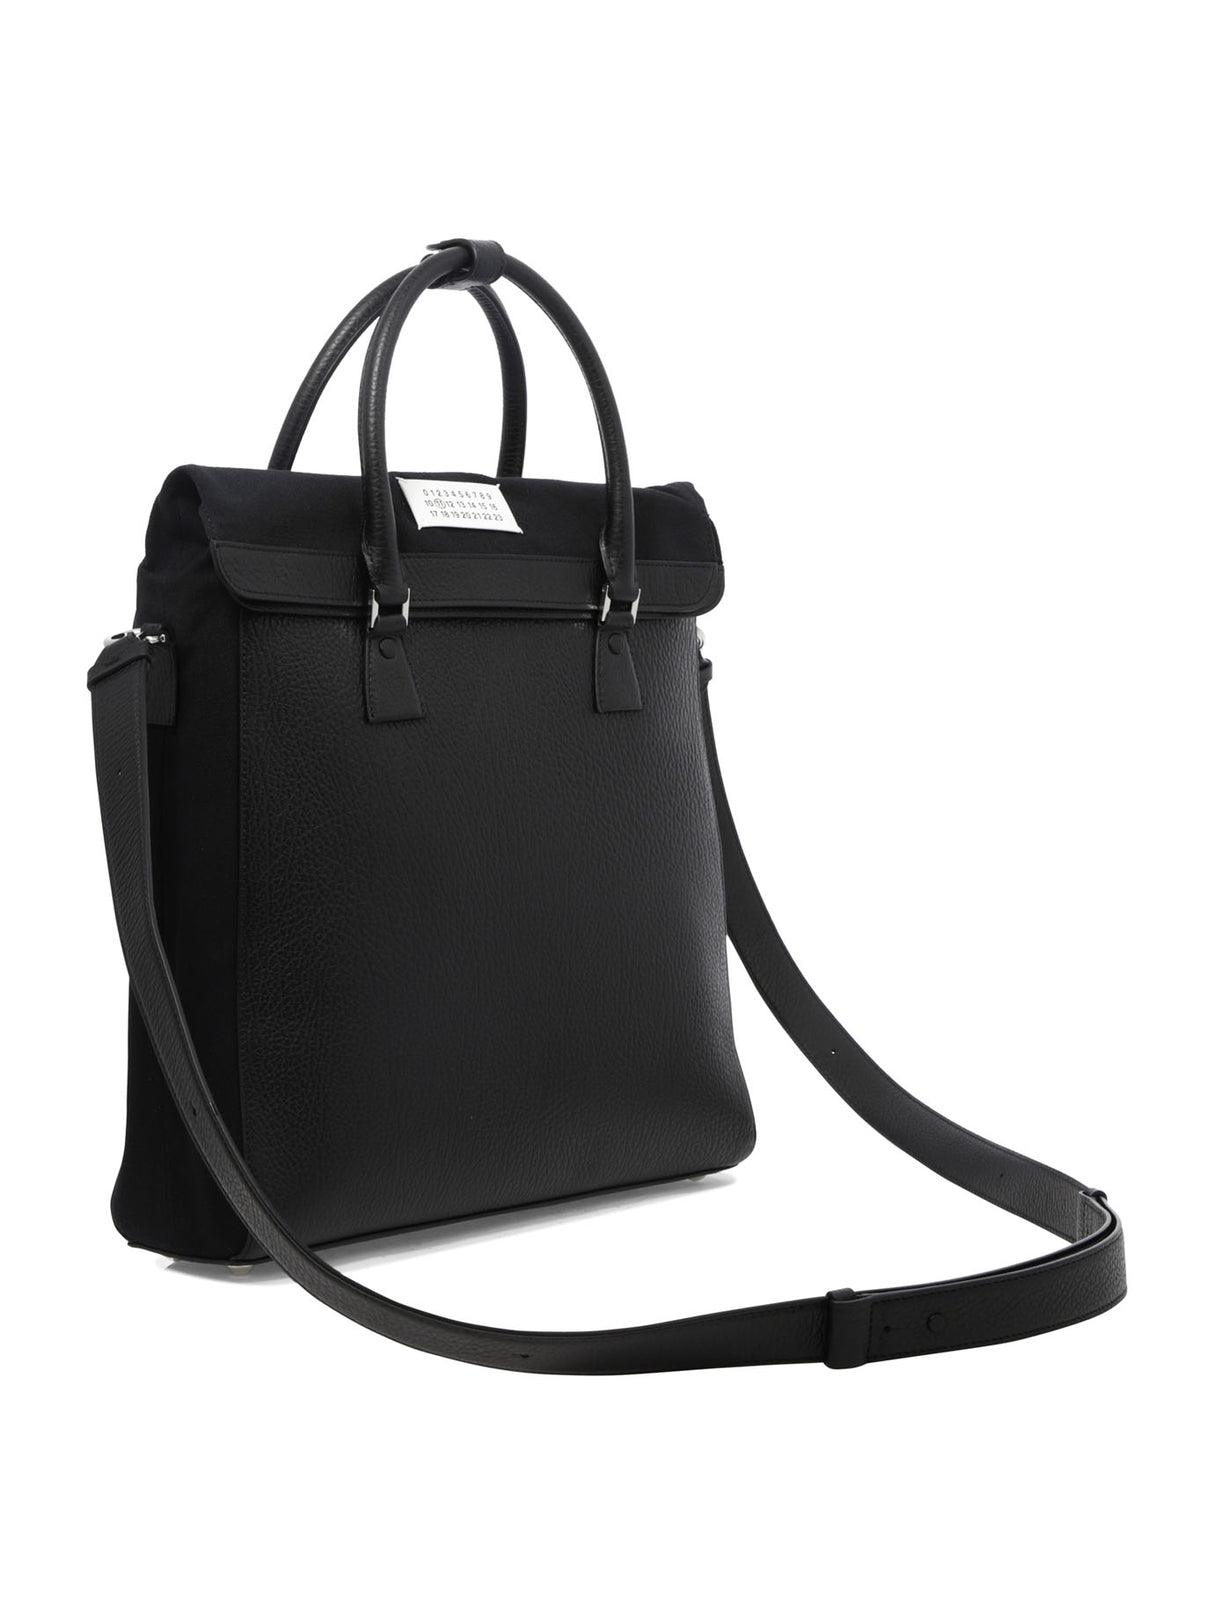 MAISON MARGIELA Classic Black Leather Backpack for Women